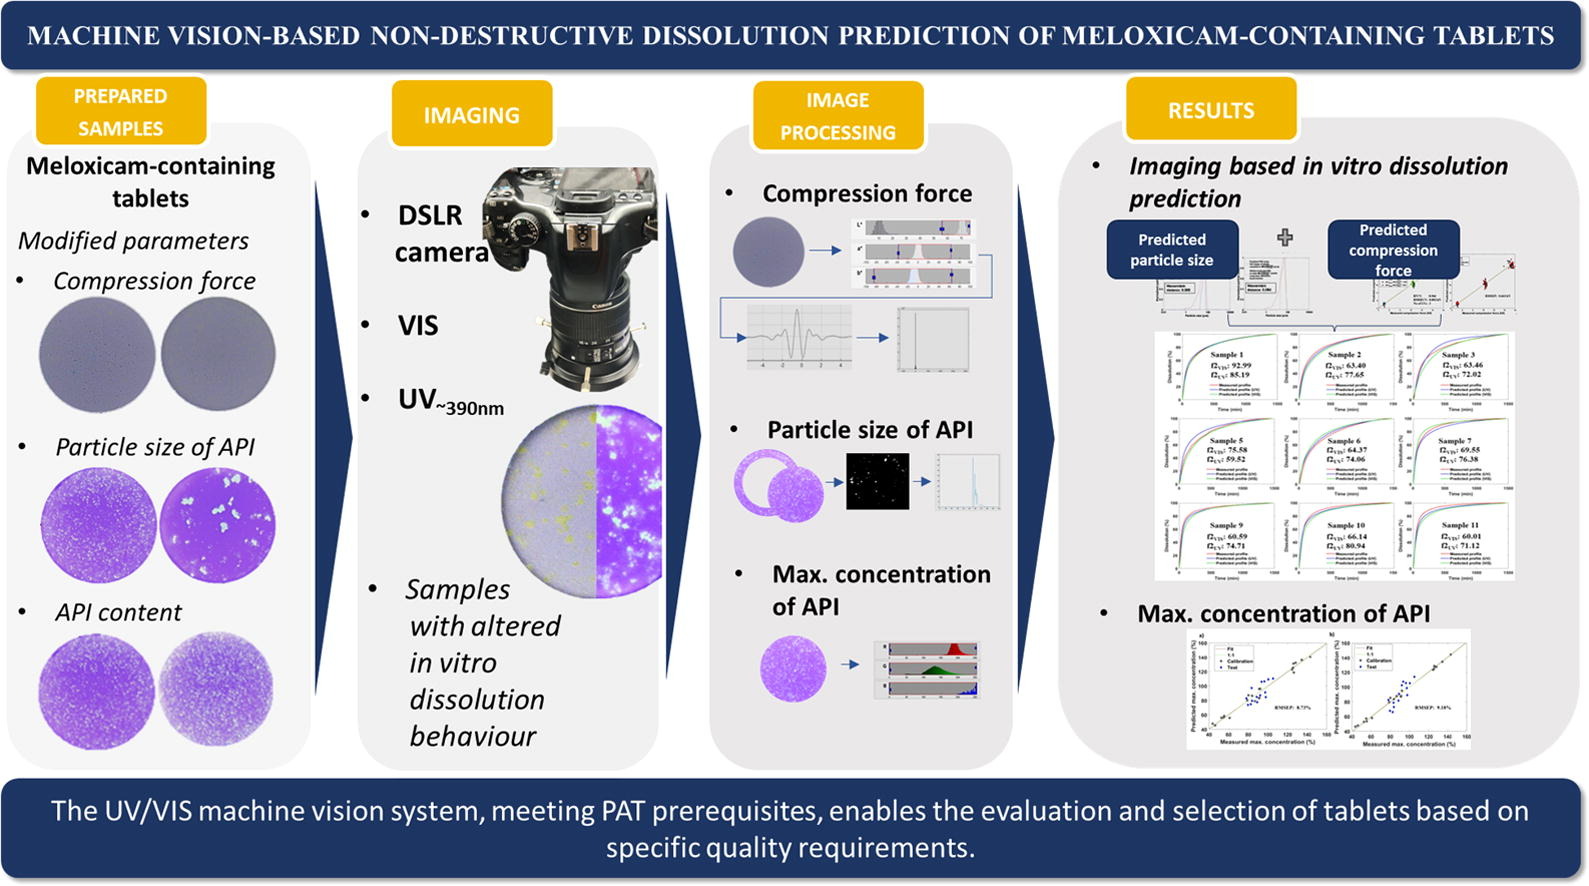 Machine vision-based non-destructive dissolution prediction of meloxicam-containing tablets